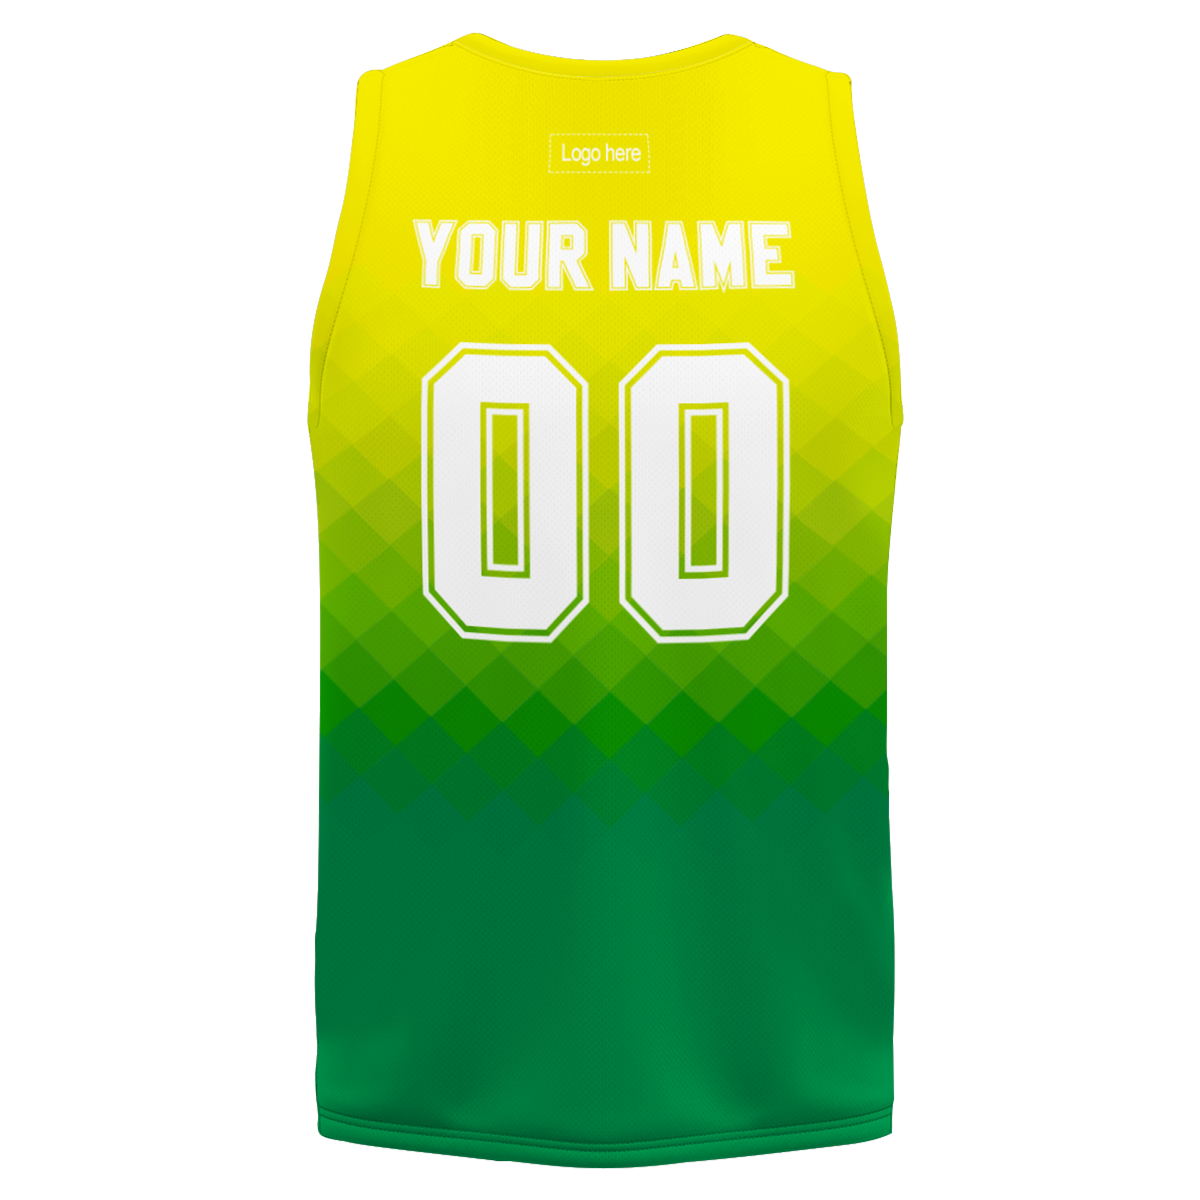 custom-design-basketball-jerseys-sublimation-printed-sports-basketball-uniforms-wholesale-team-basketball-suits-at-cj-pod-6